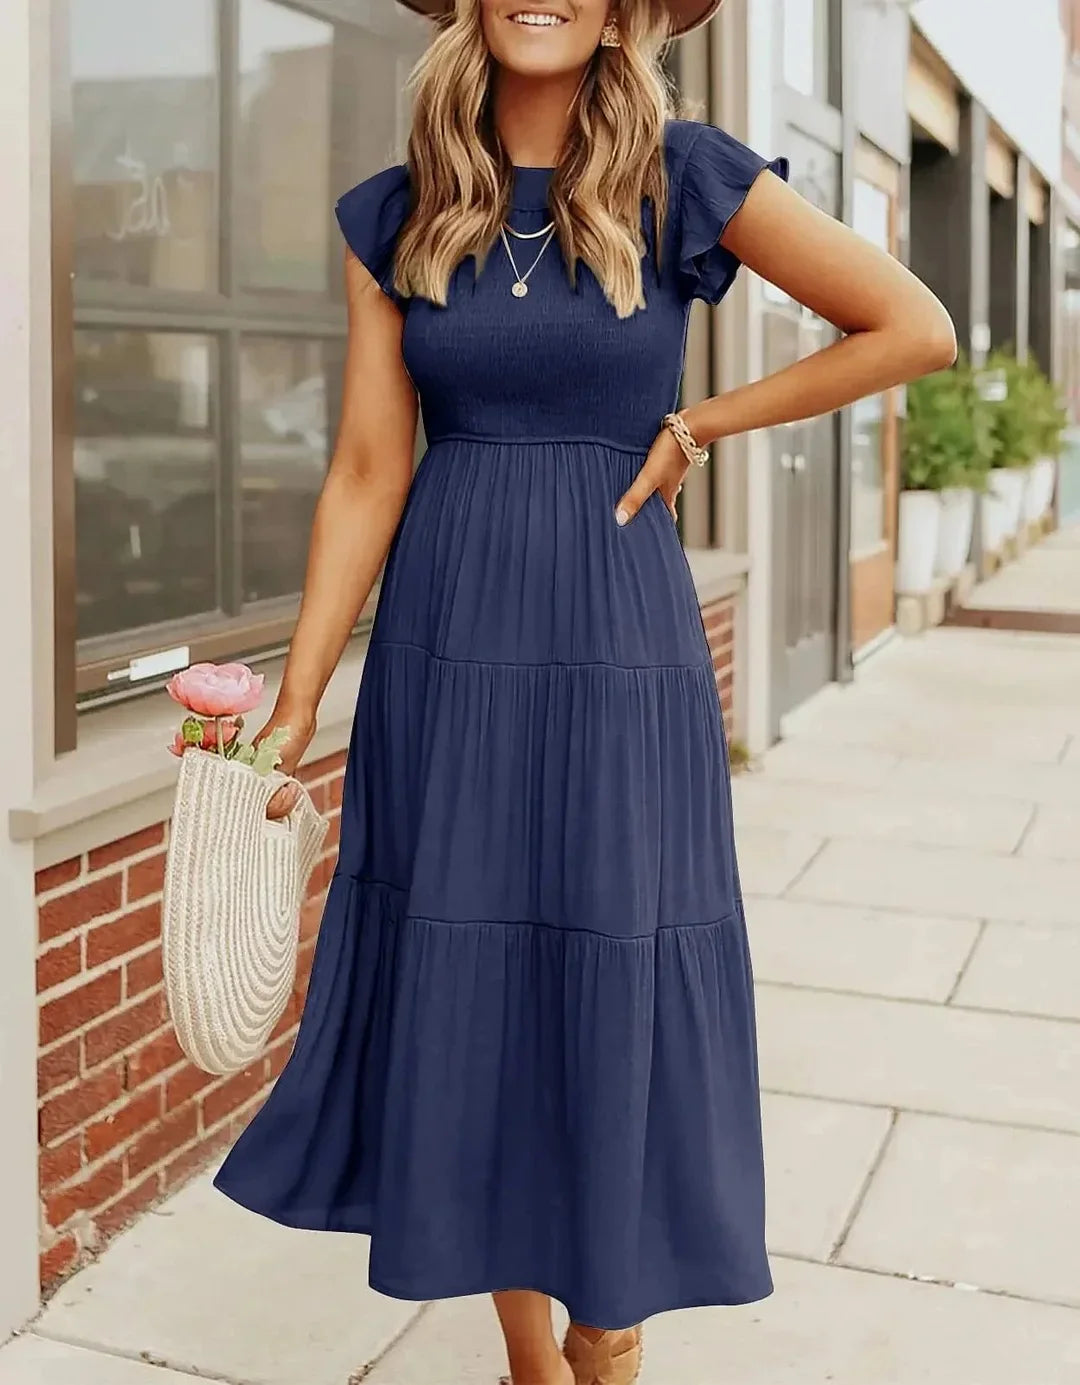 Desiree - Women's midi-length casual summer dress